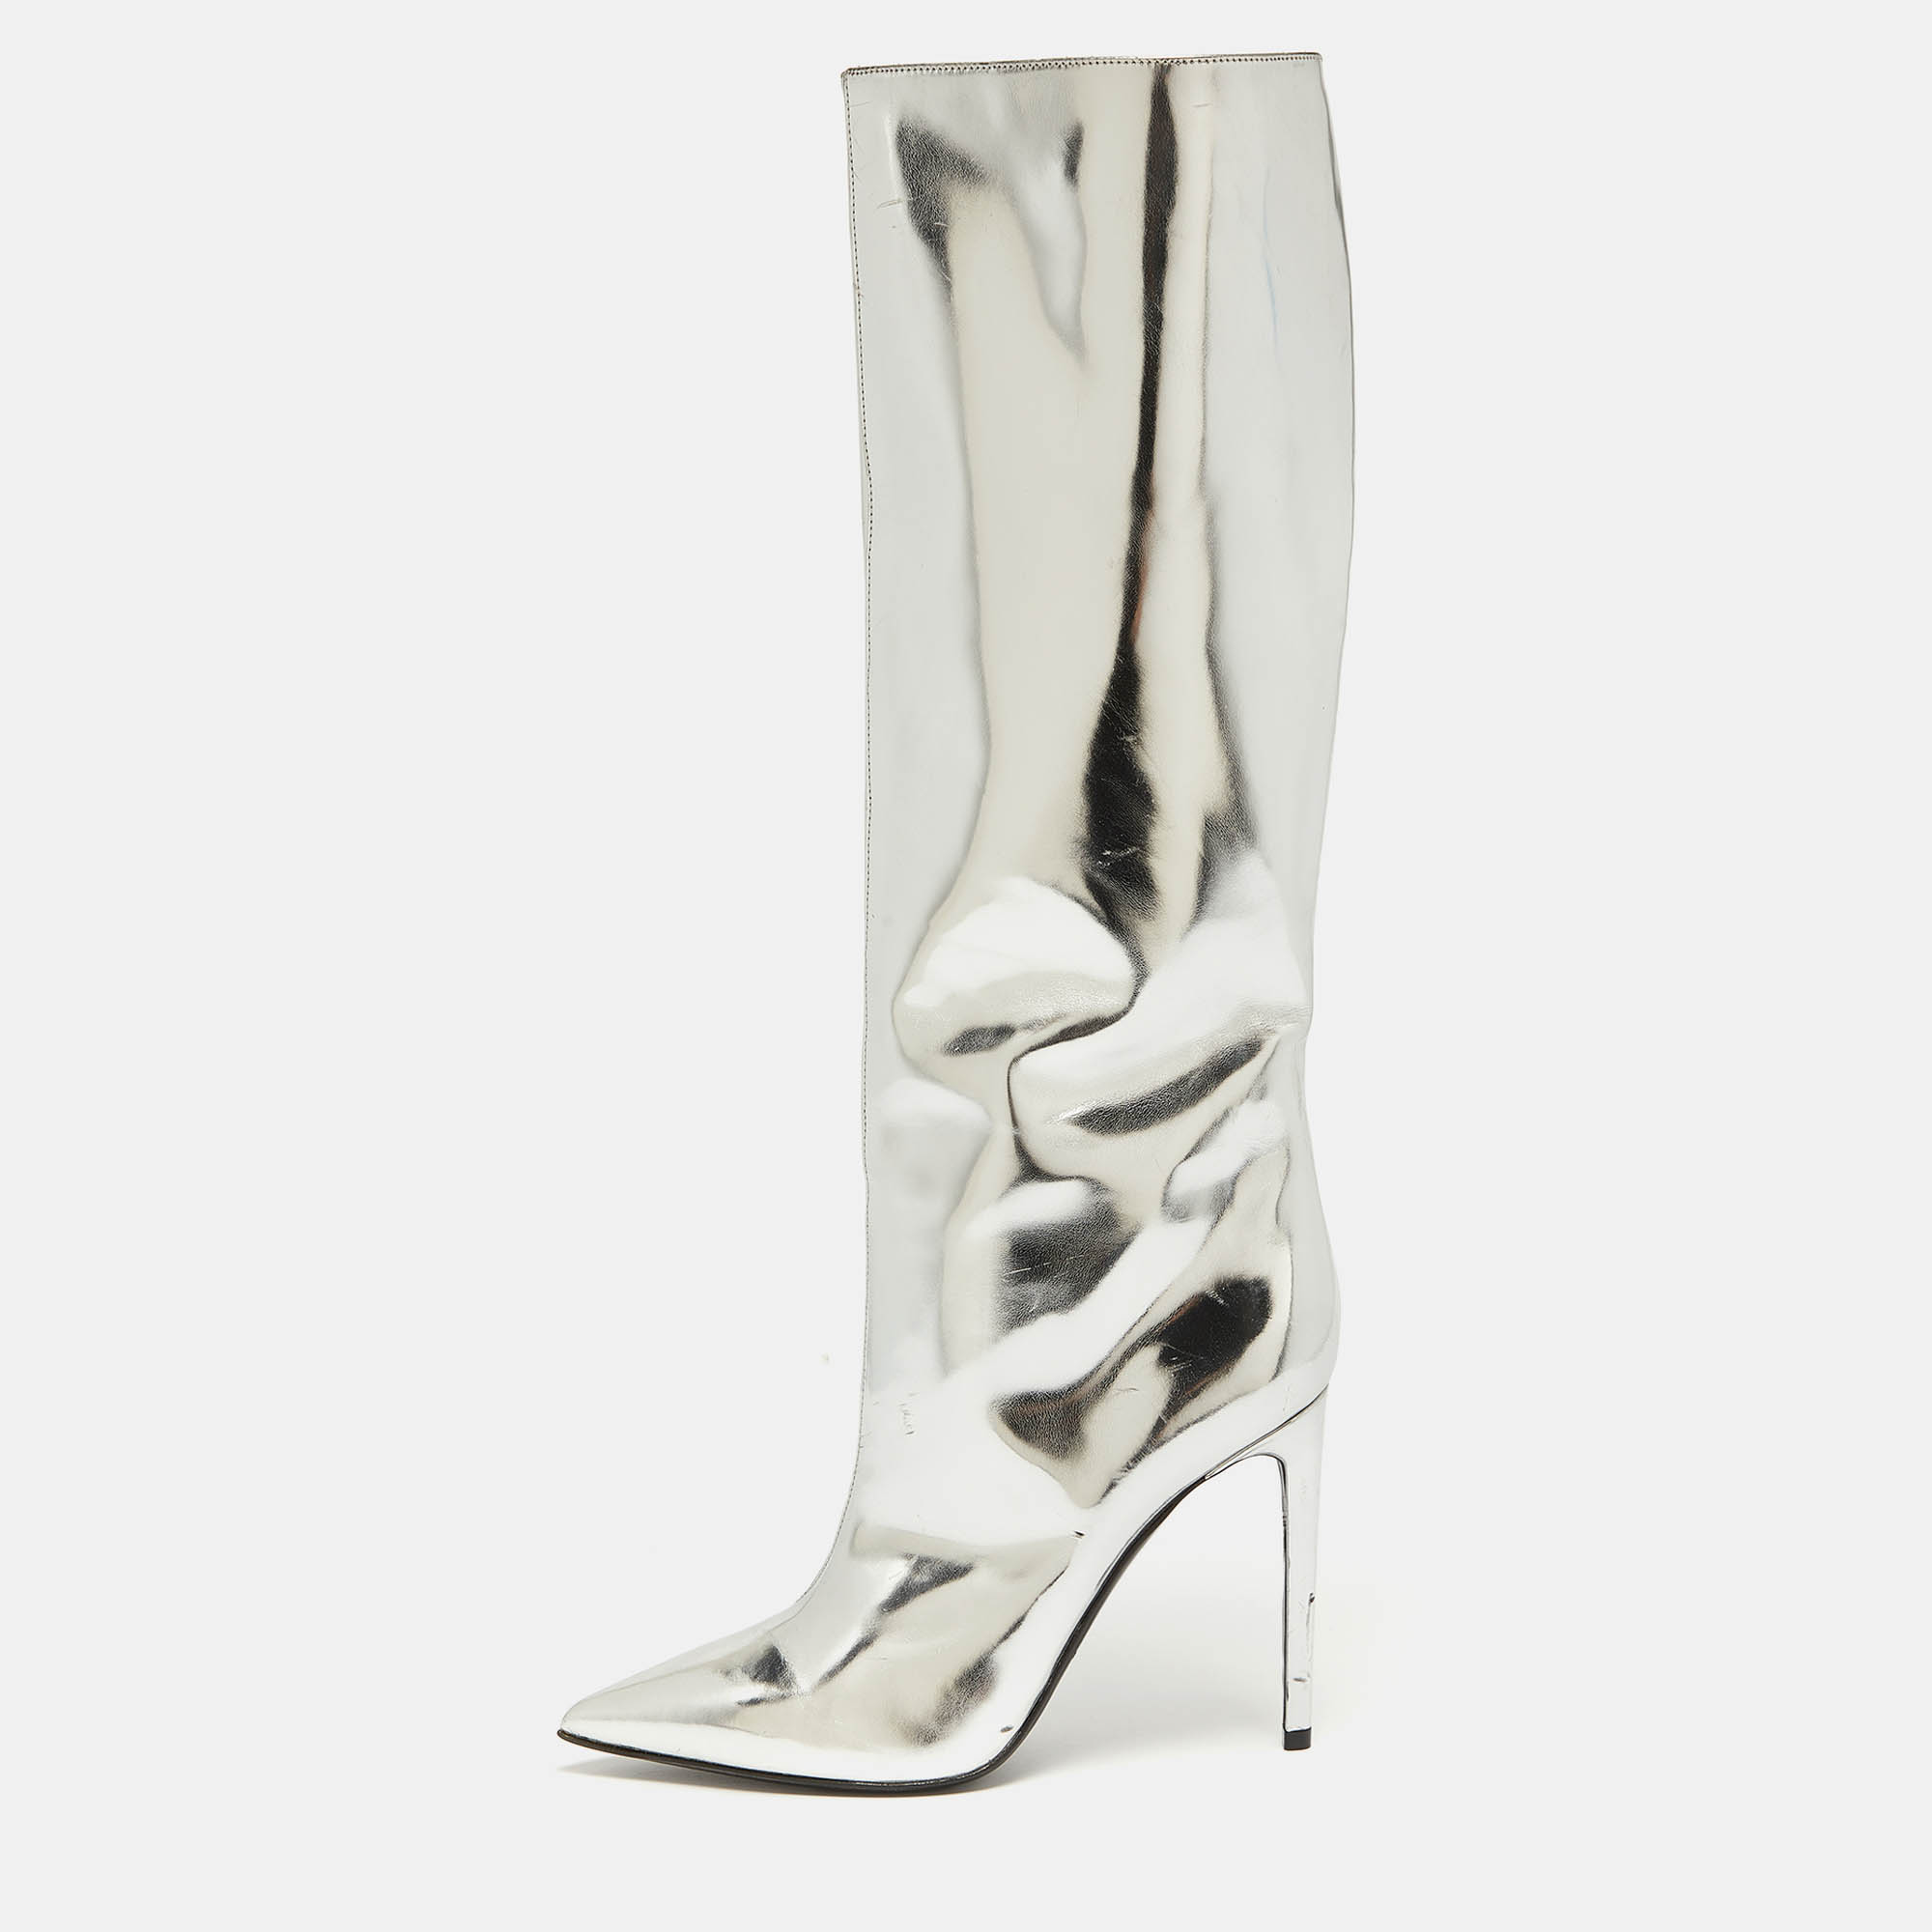 Balenciaga silver leather knee length boots size 38.5